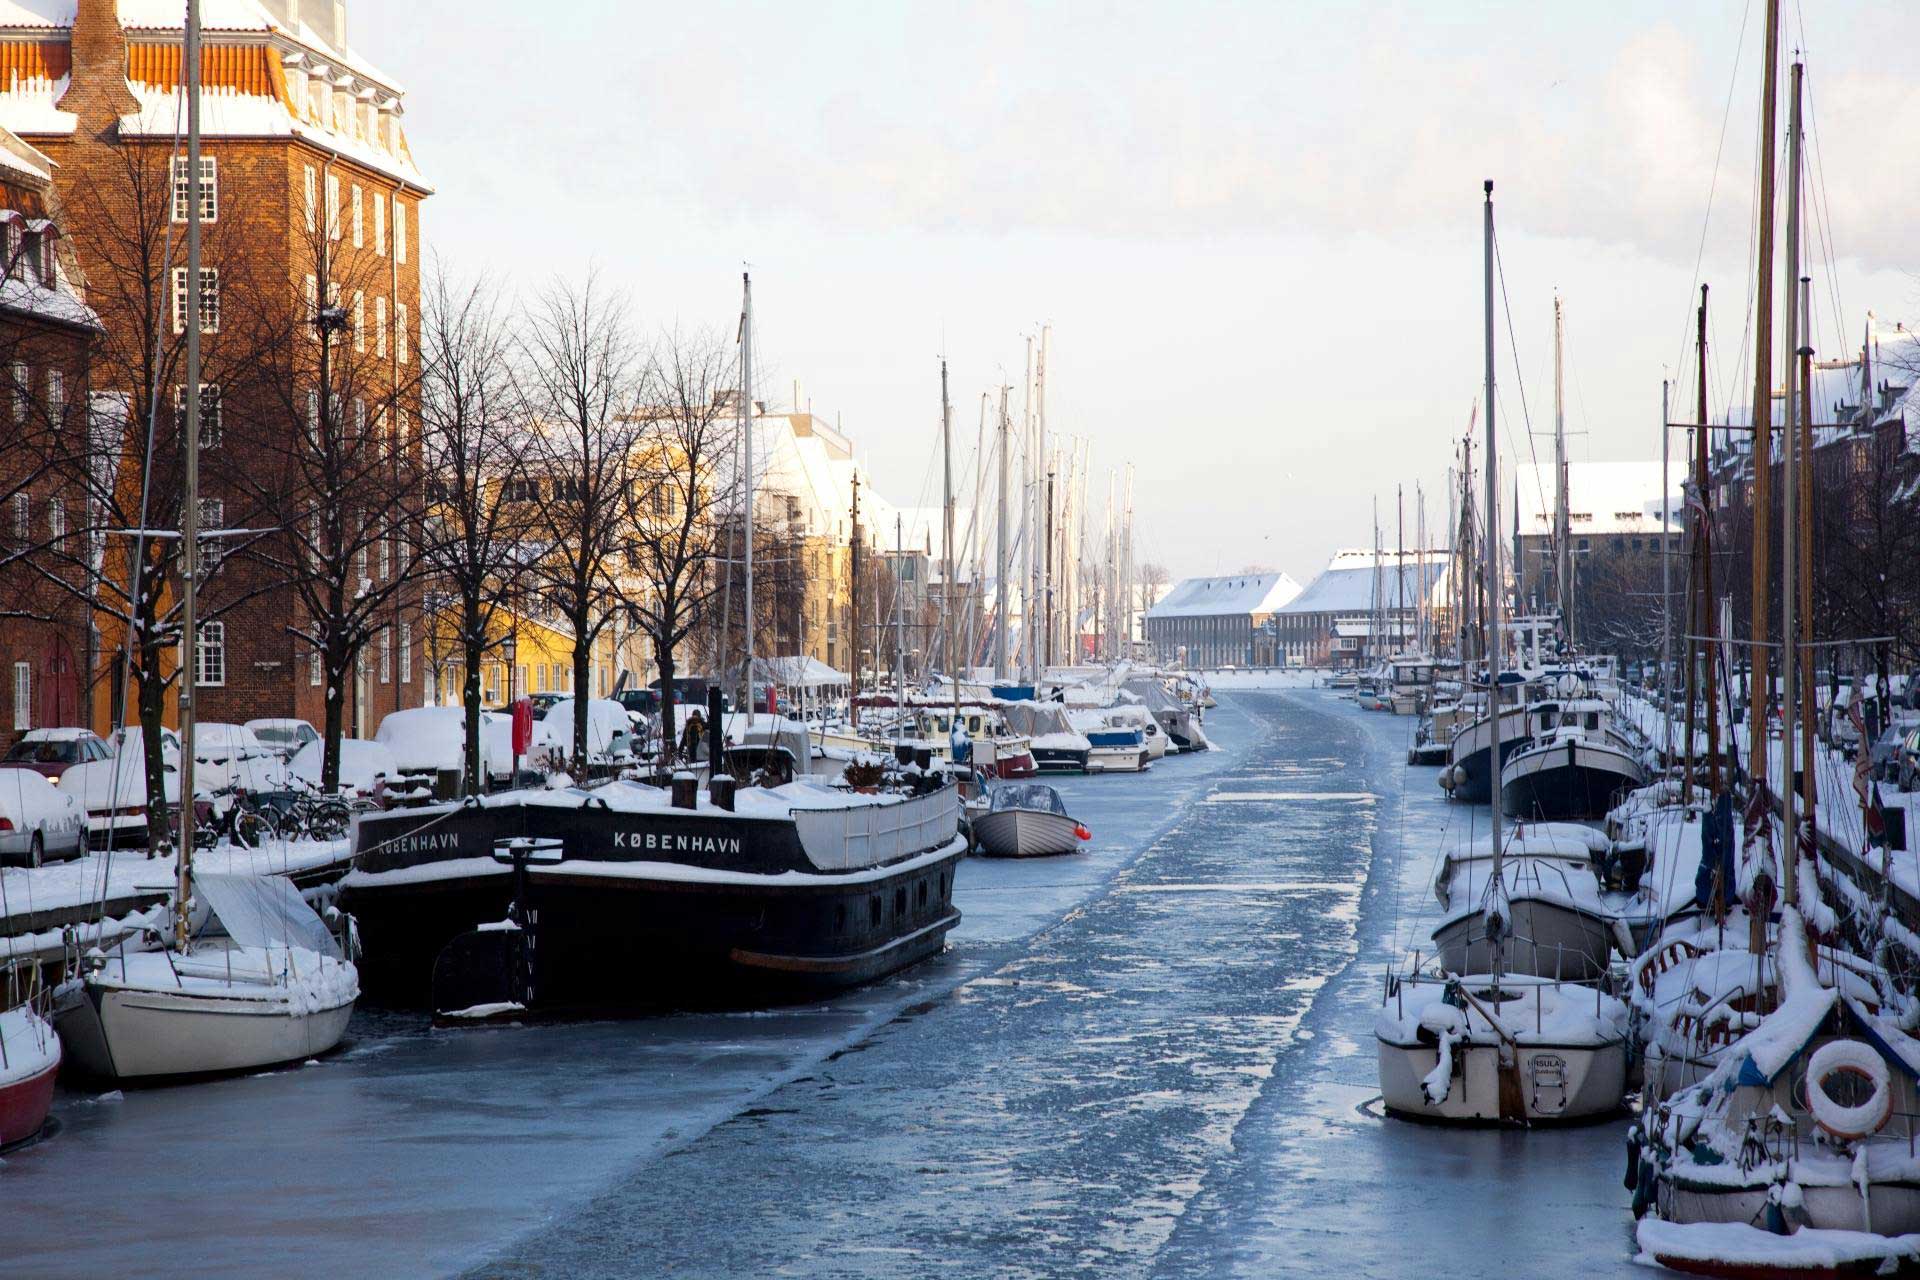 Christianshavn canal in winter